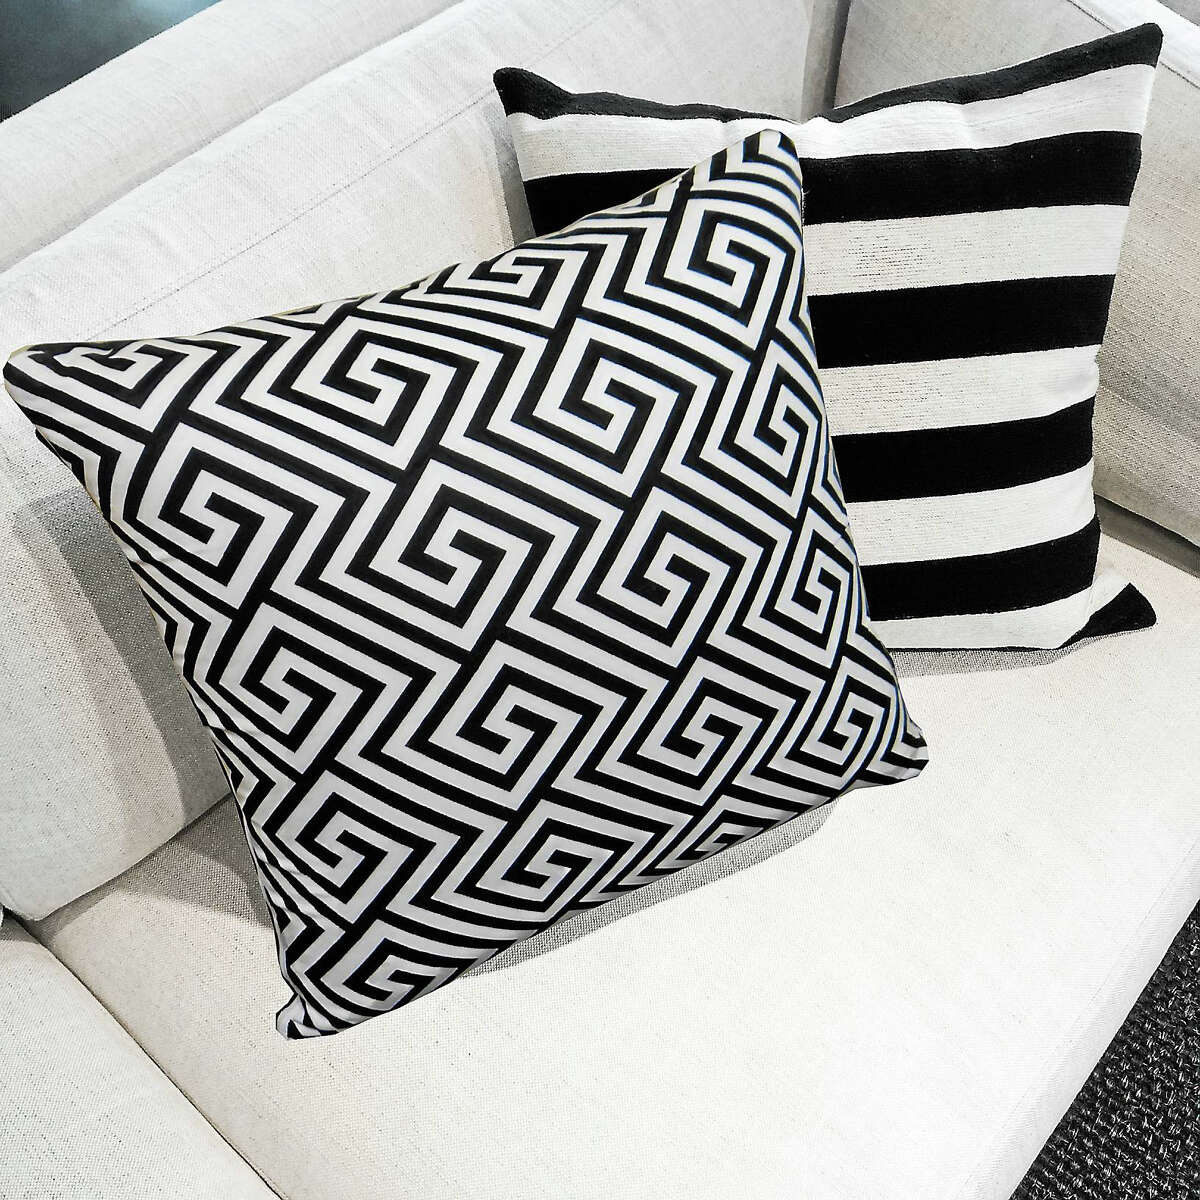 Black and white M Cushions on a sofa